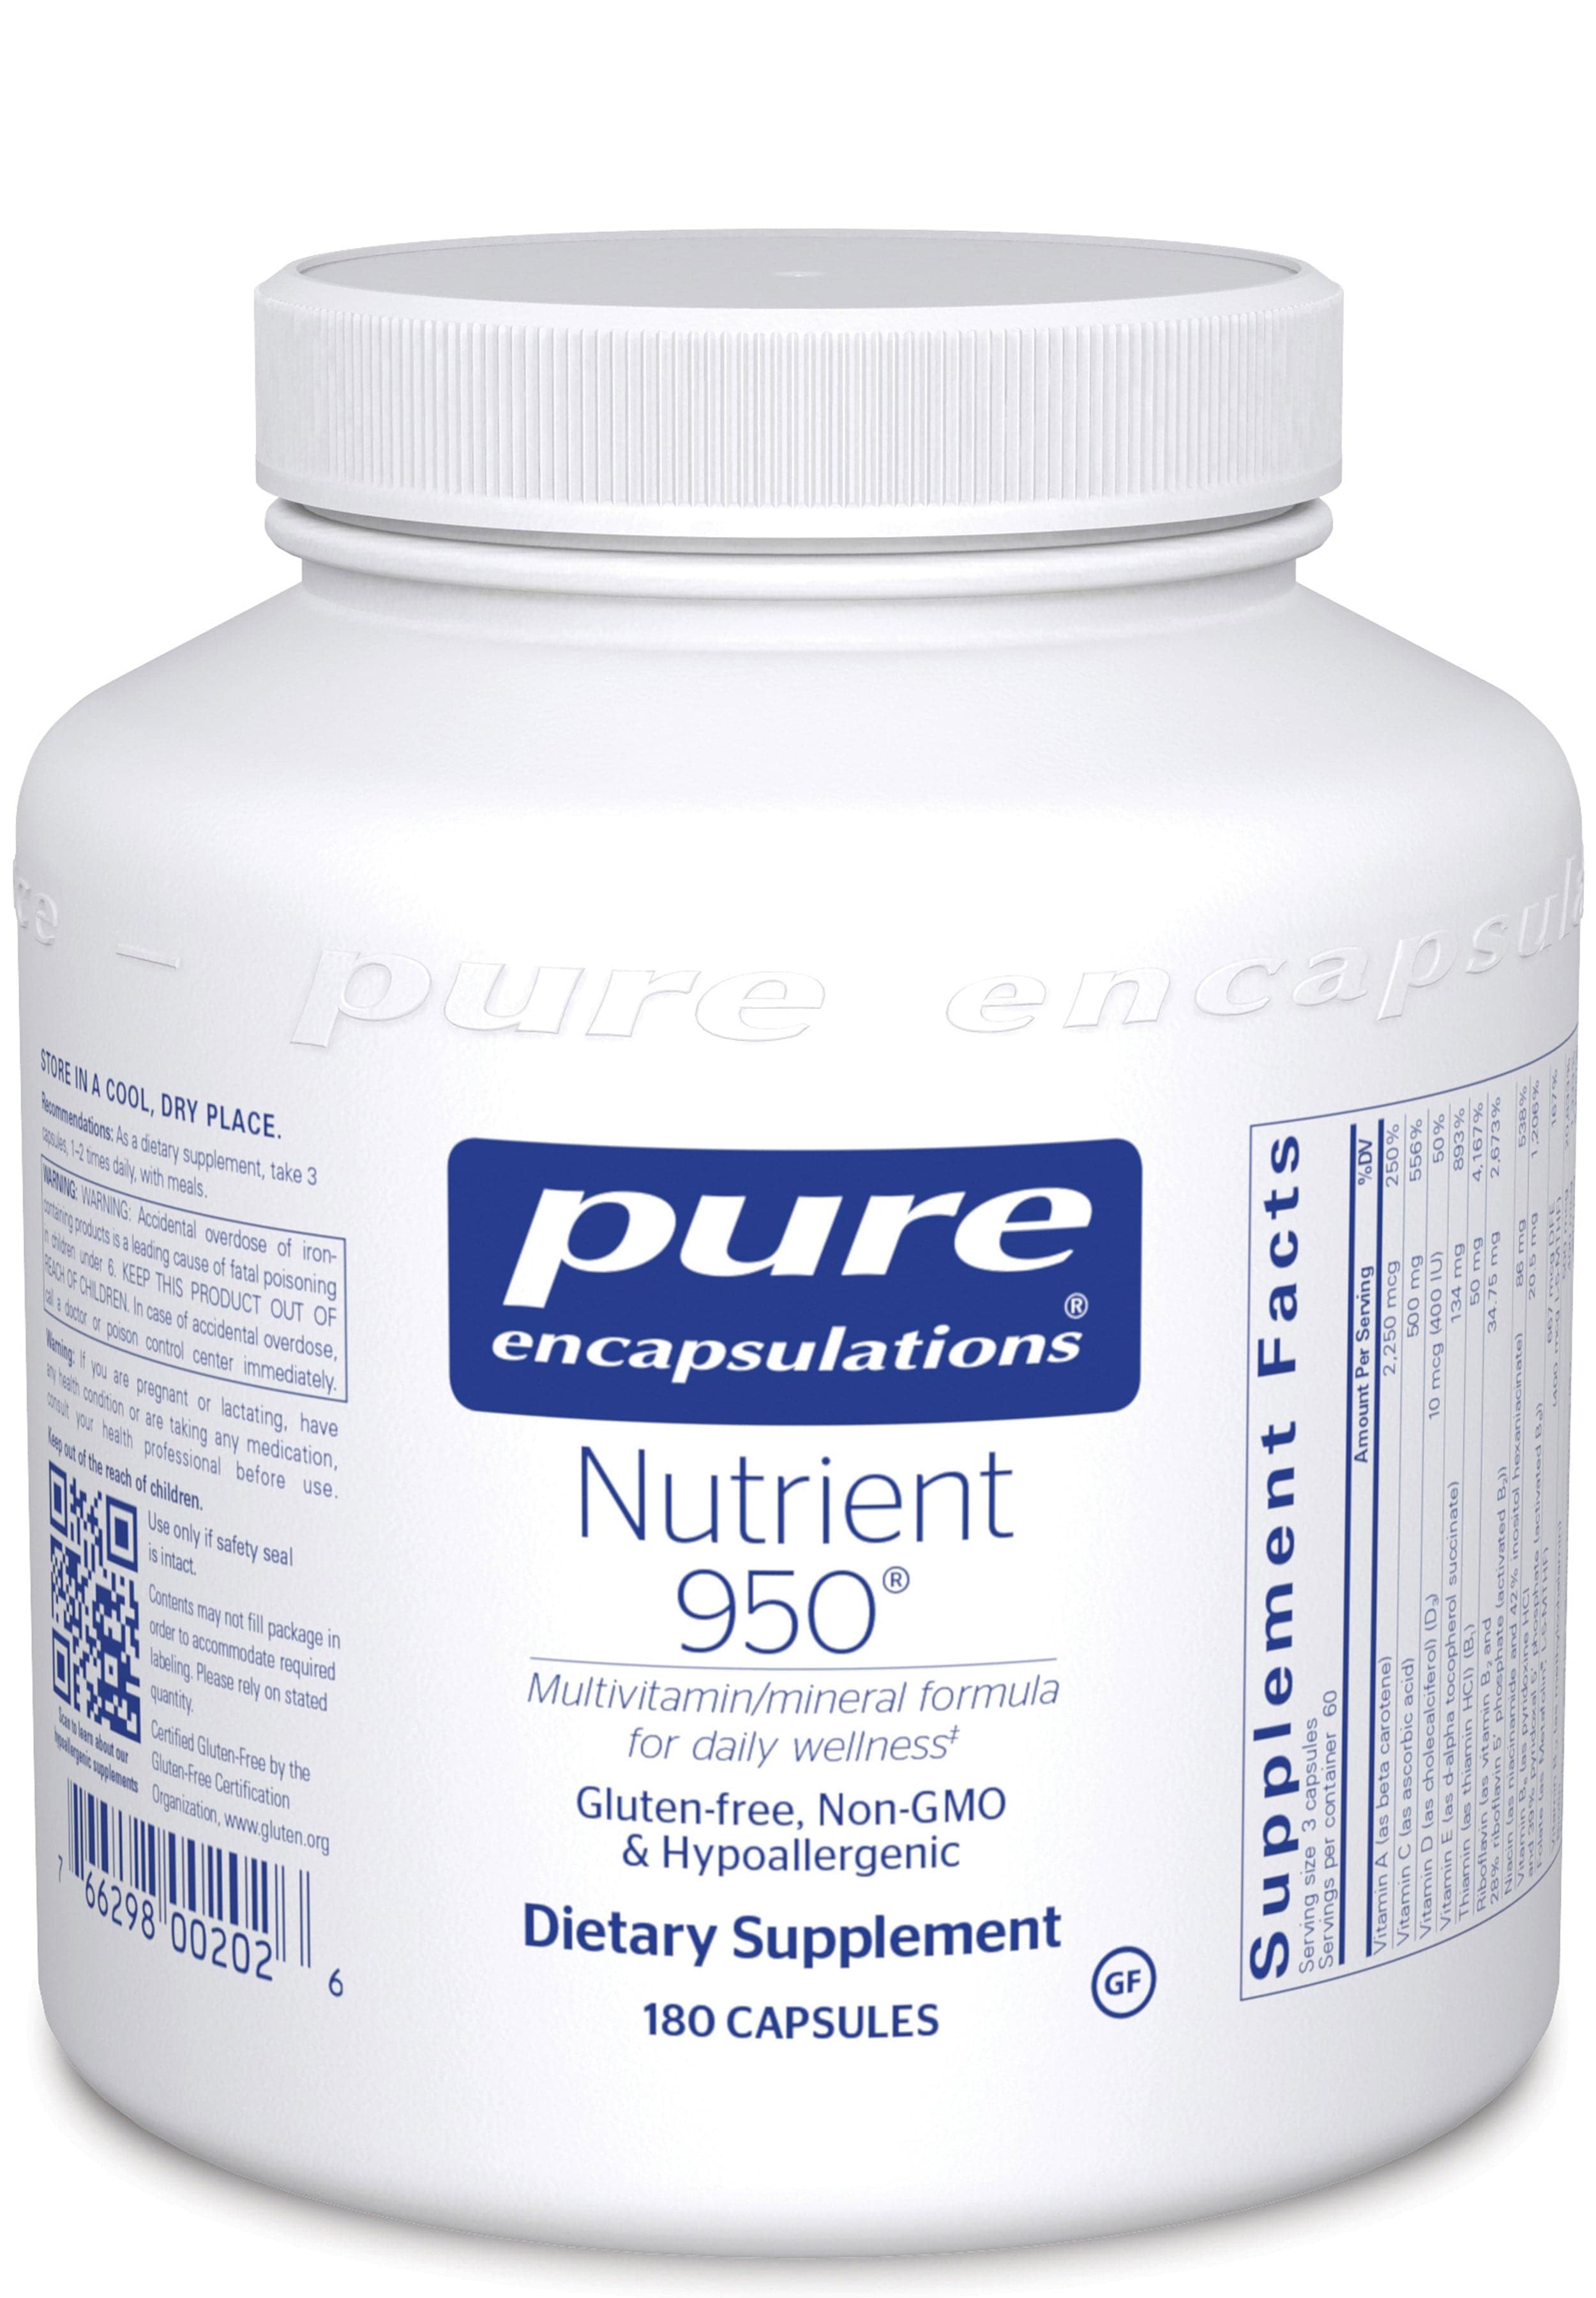 Pure Encapsulations Nutrient 950 